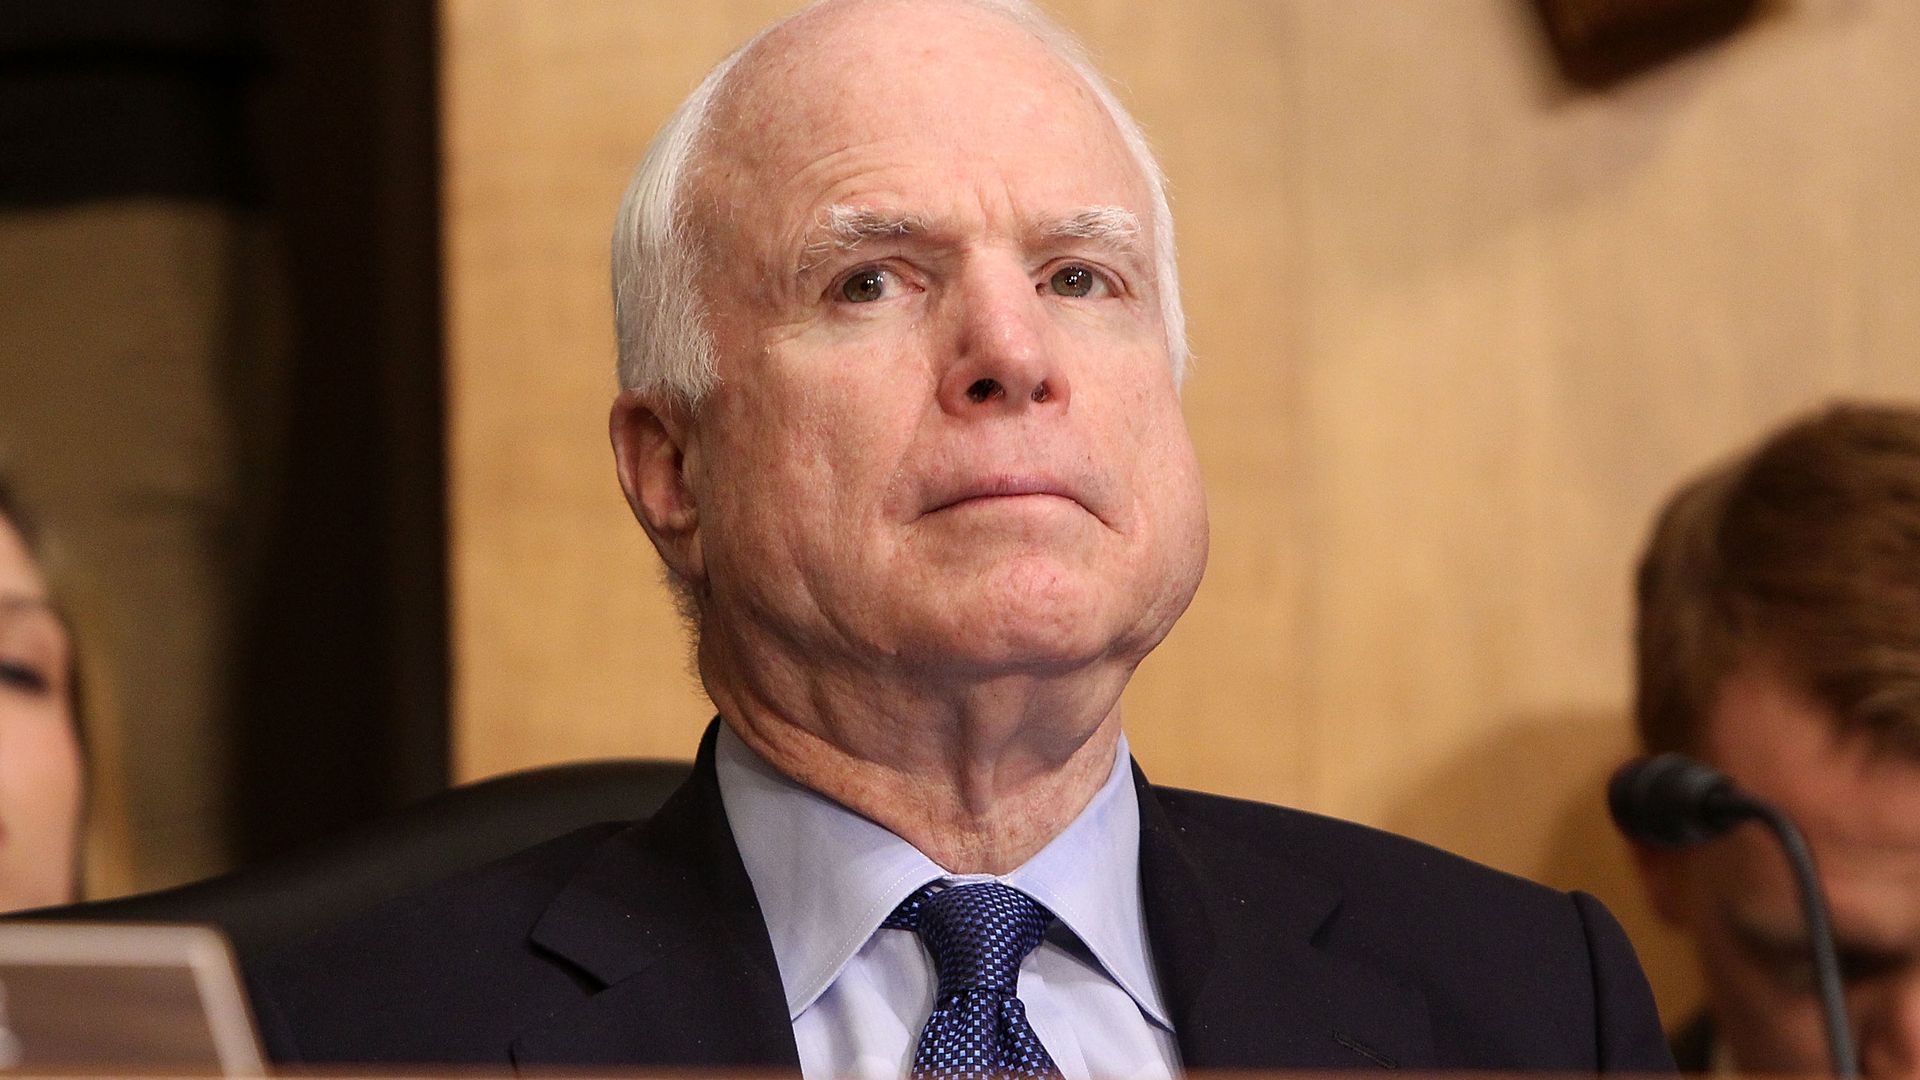 John McCain - Biography